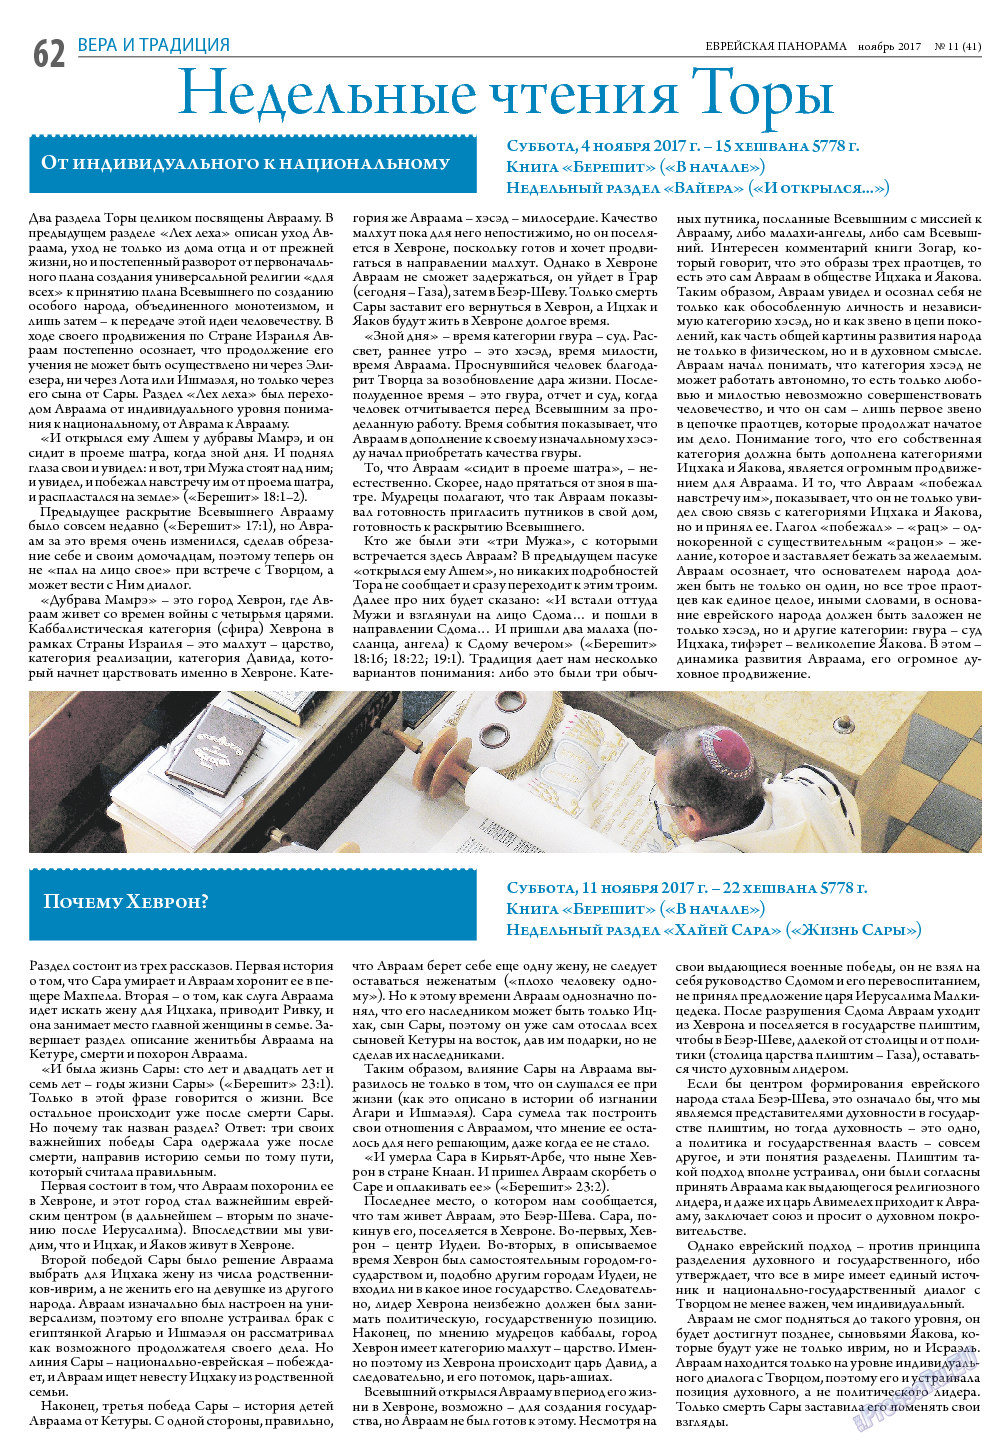 Еврейская панорама, газета. 2017 №11 стр.62